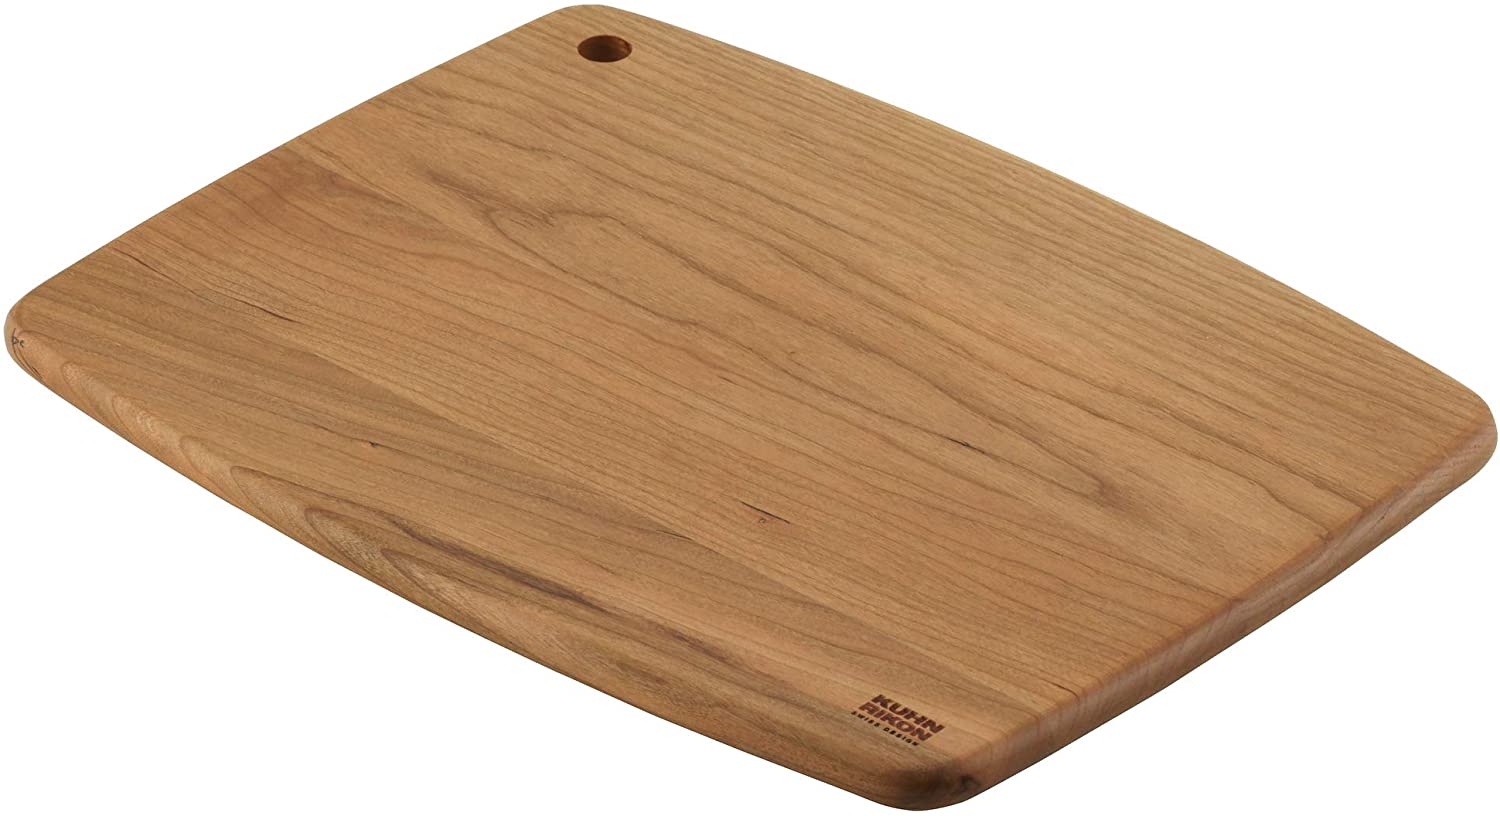 Kuhn Rikon 35031 Chopping Board Oiled Cherry Wood Brown